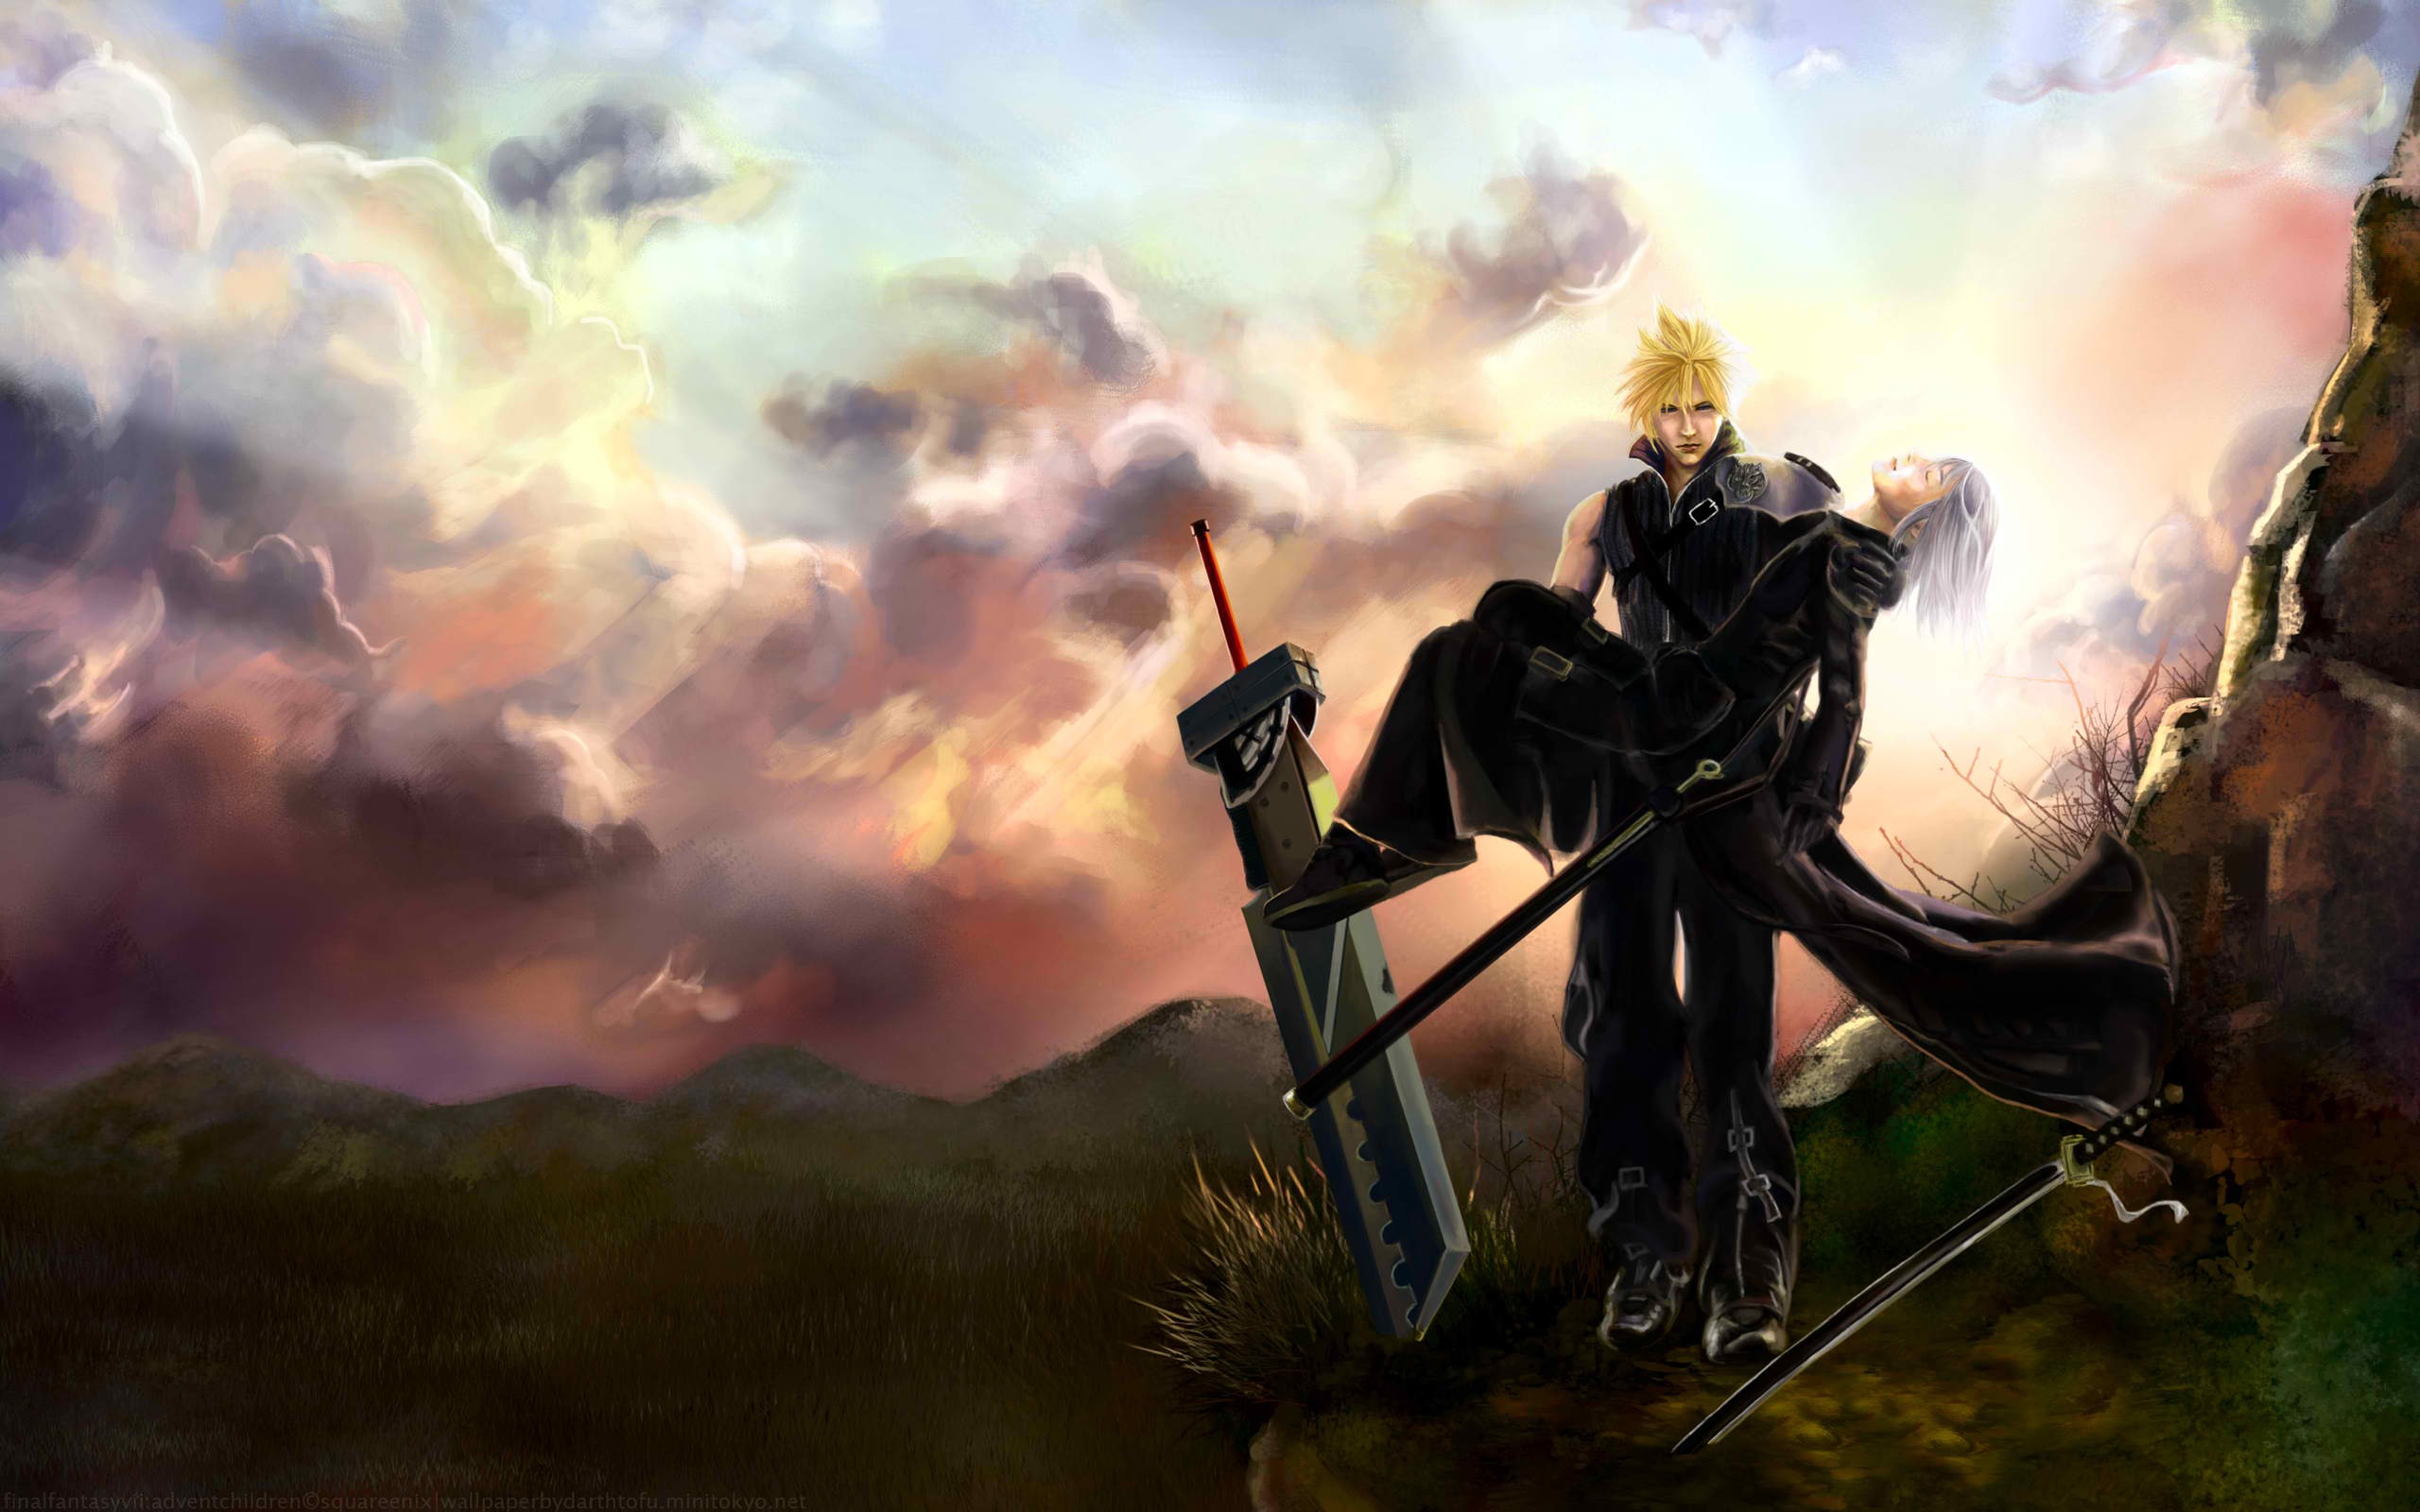 Final Fantasy Sephiroth Cloud Strife Zack Fair Kadaj